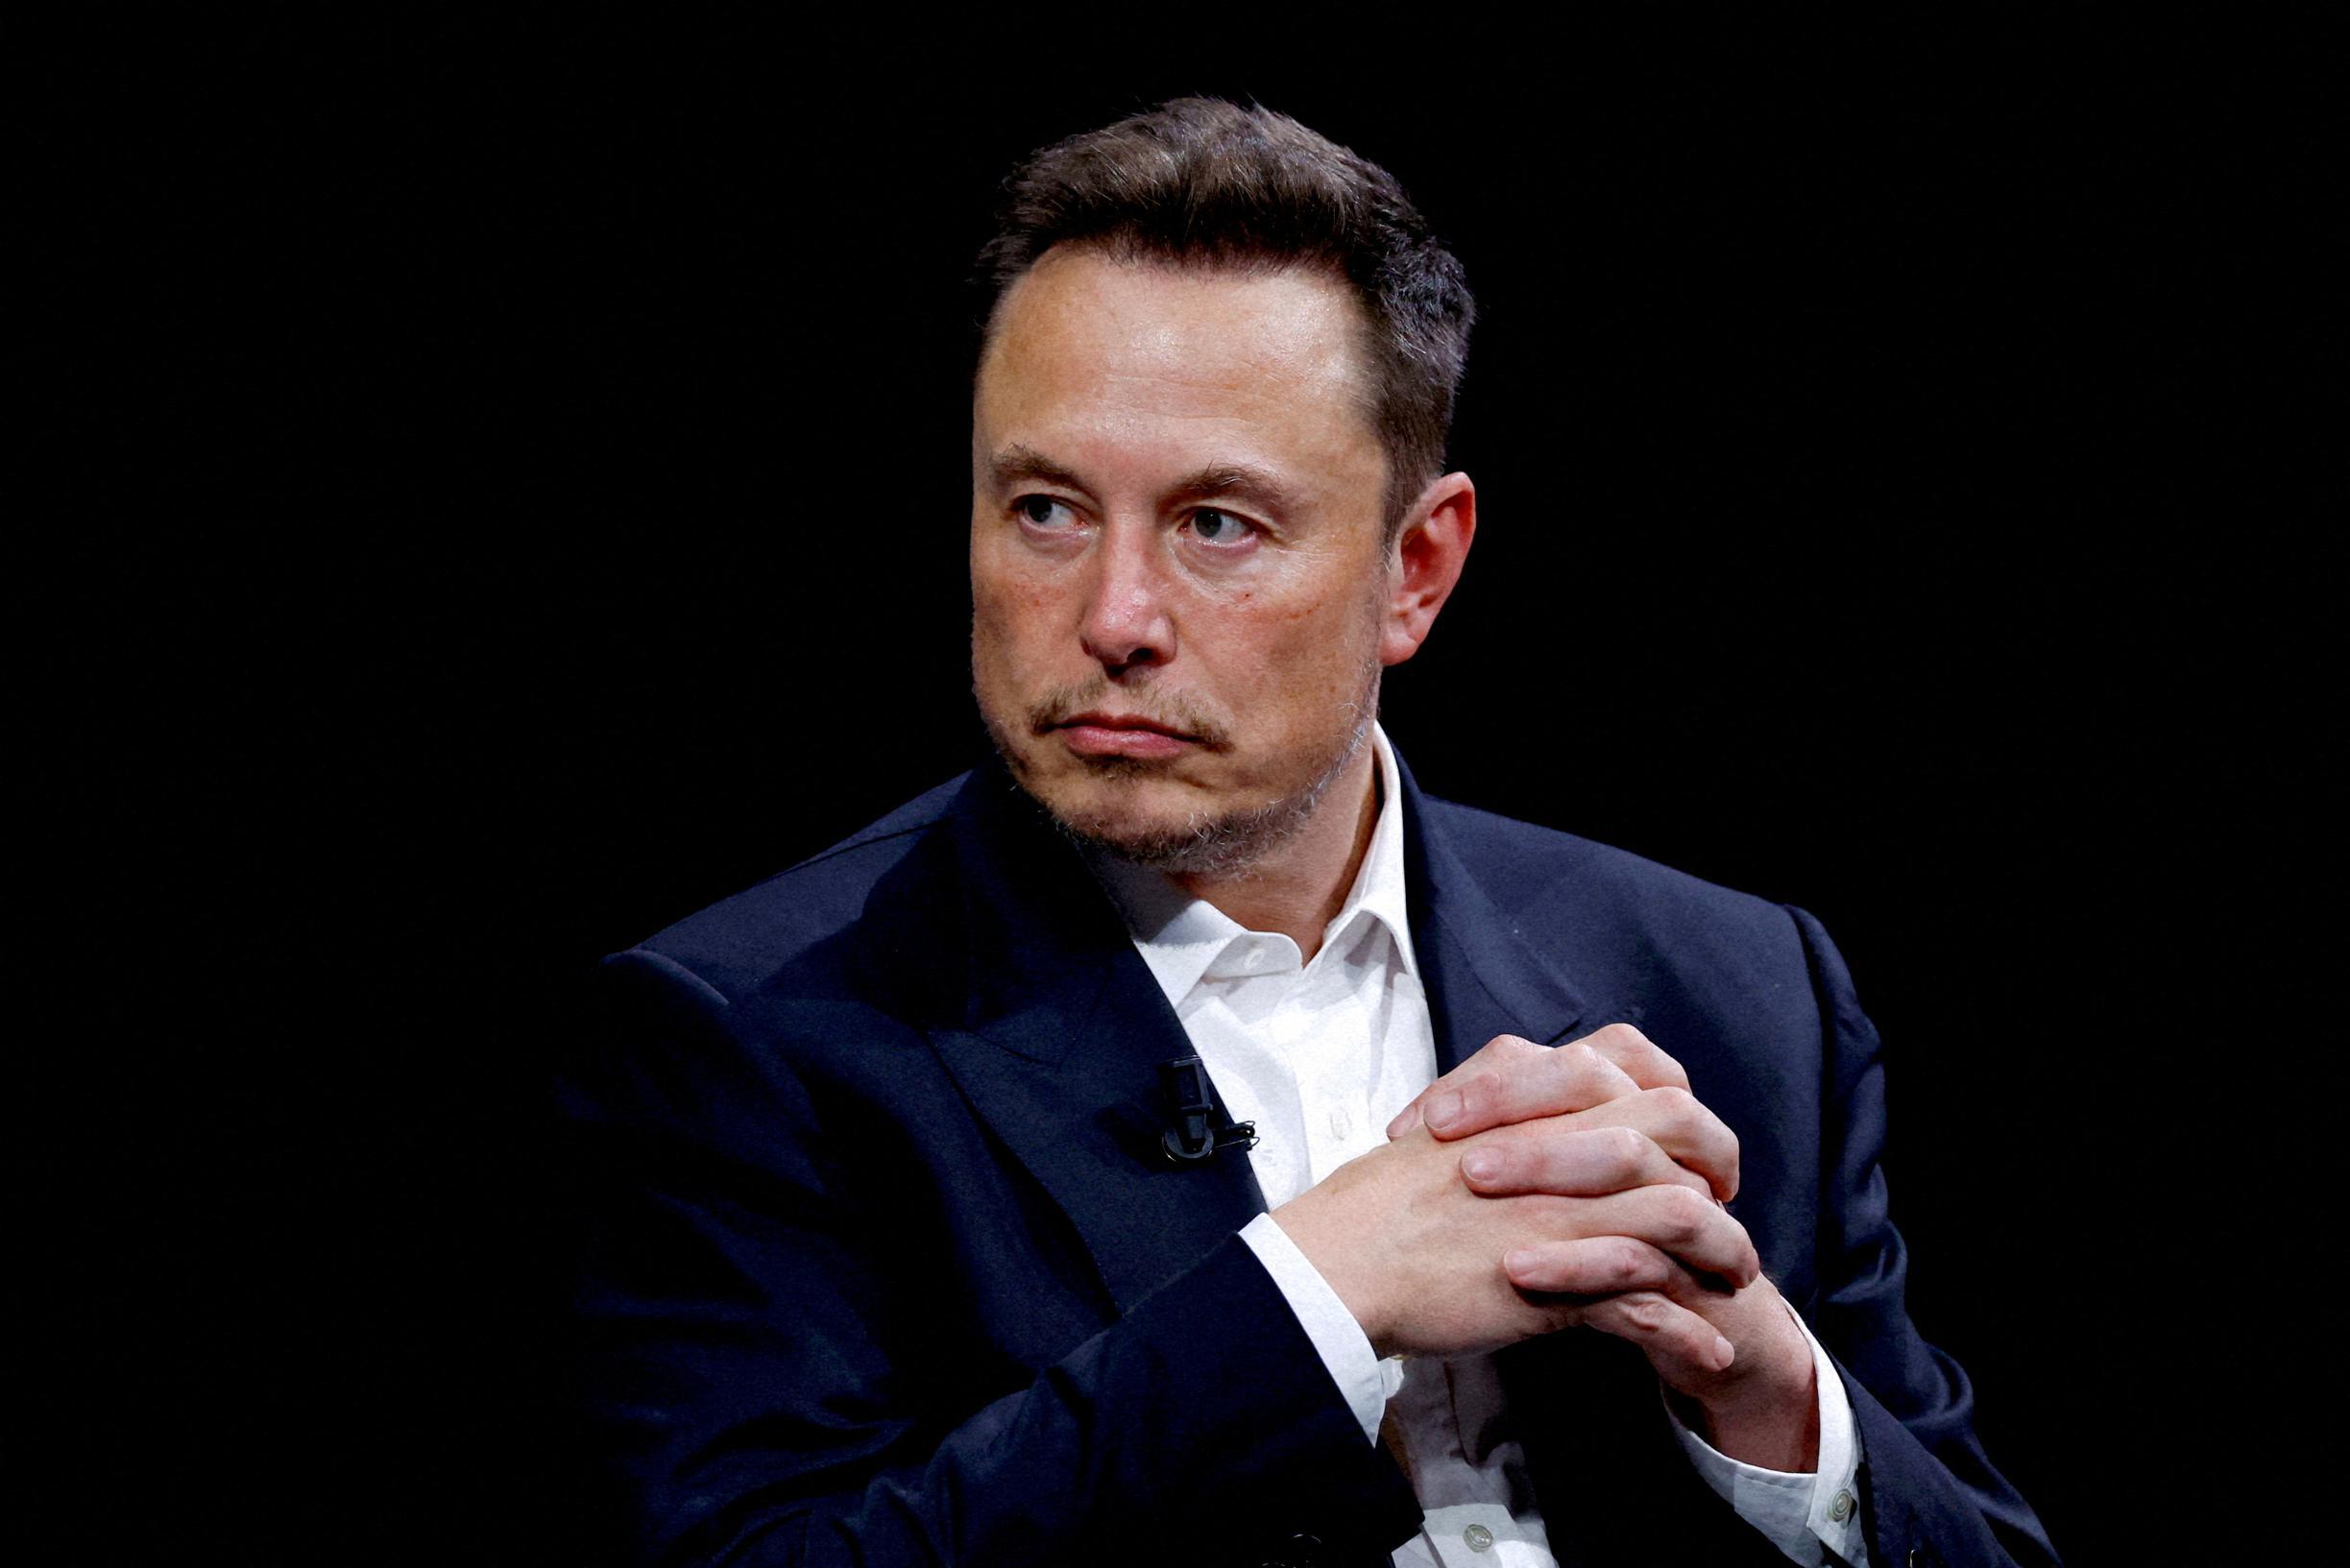 Elon Musk required to respond to American stock market regulator regarding Twitter acquisition